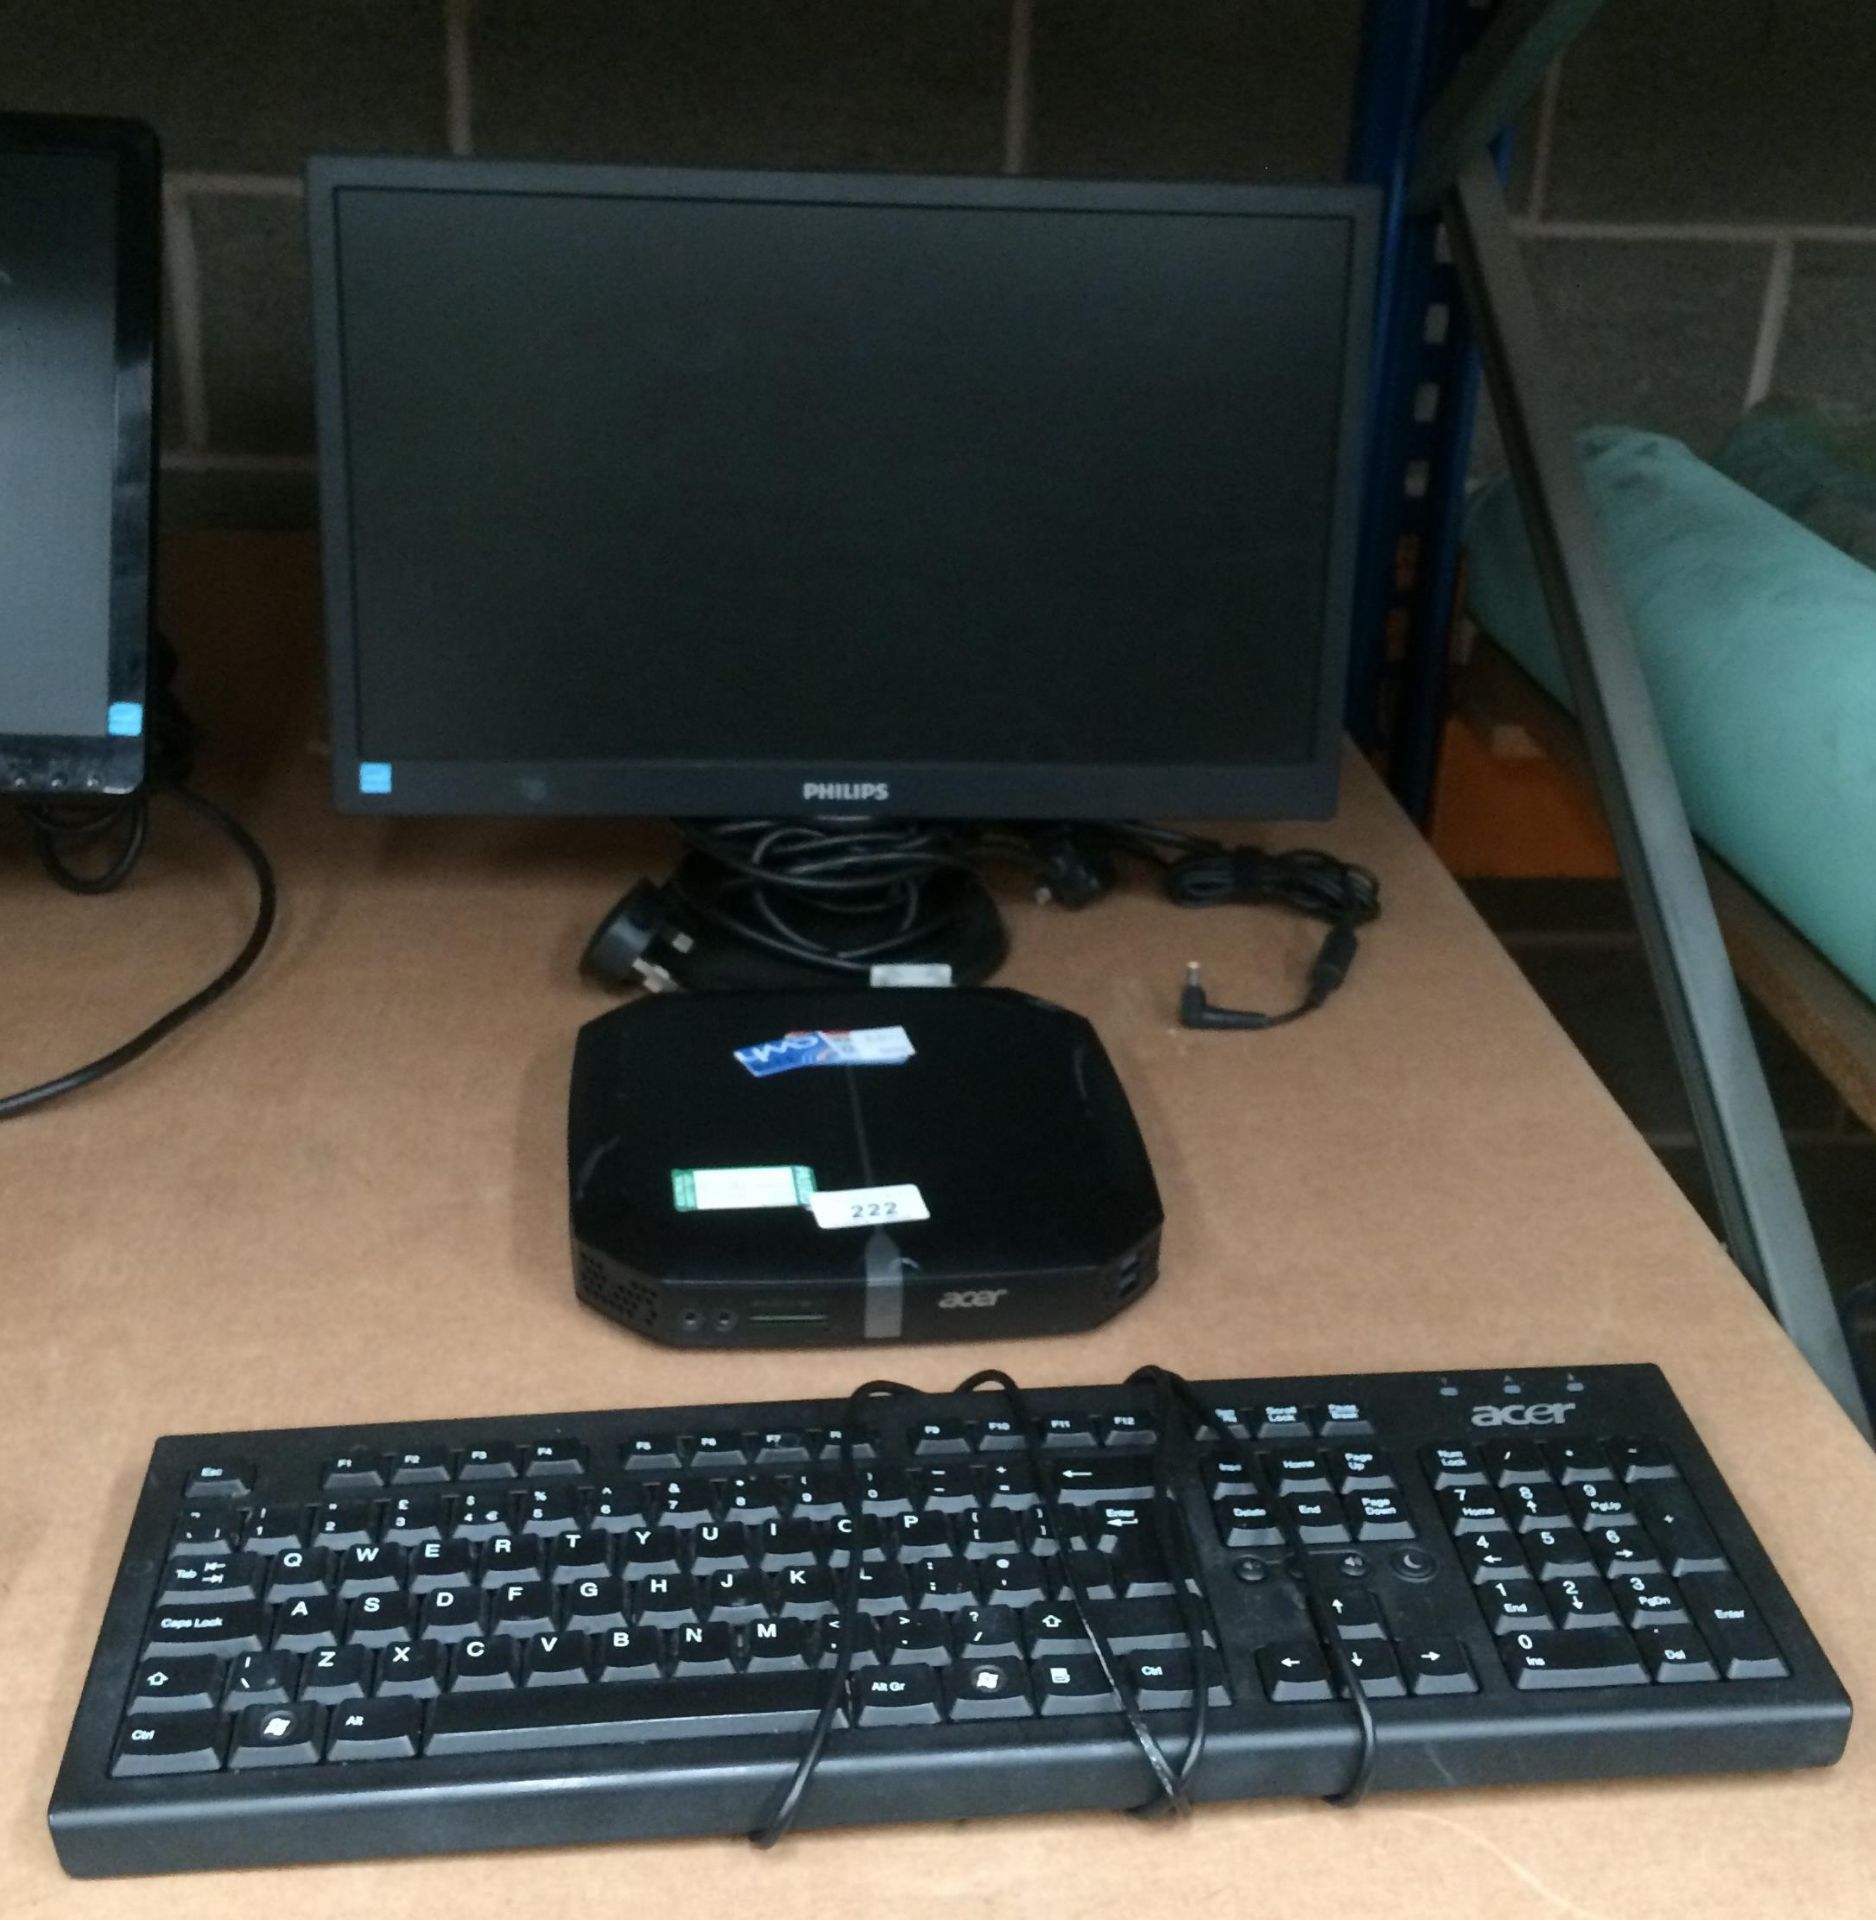 An Acer N2620G desktop computer complete